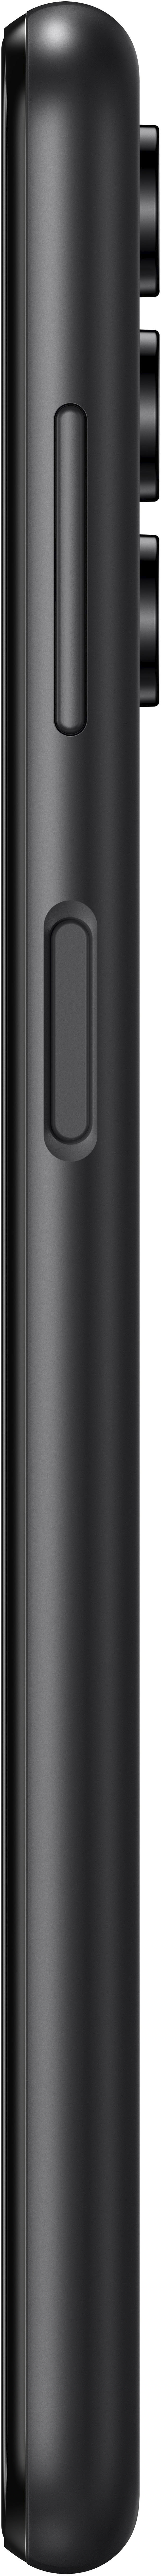 Samsung Galaxy A13 5G SM-A136U - 64GB - Black (T-Mobile) for sale online